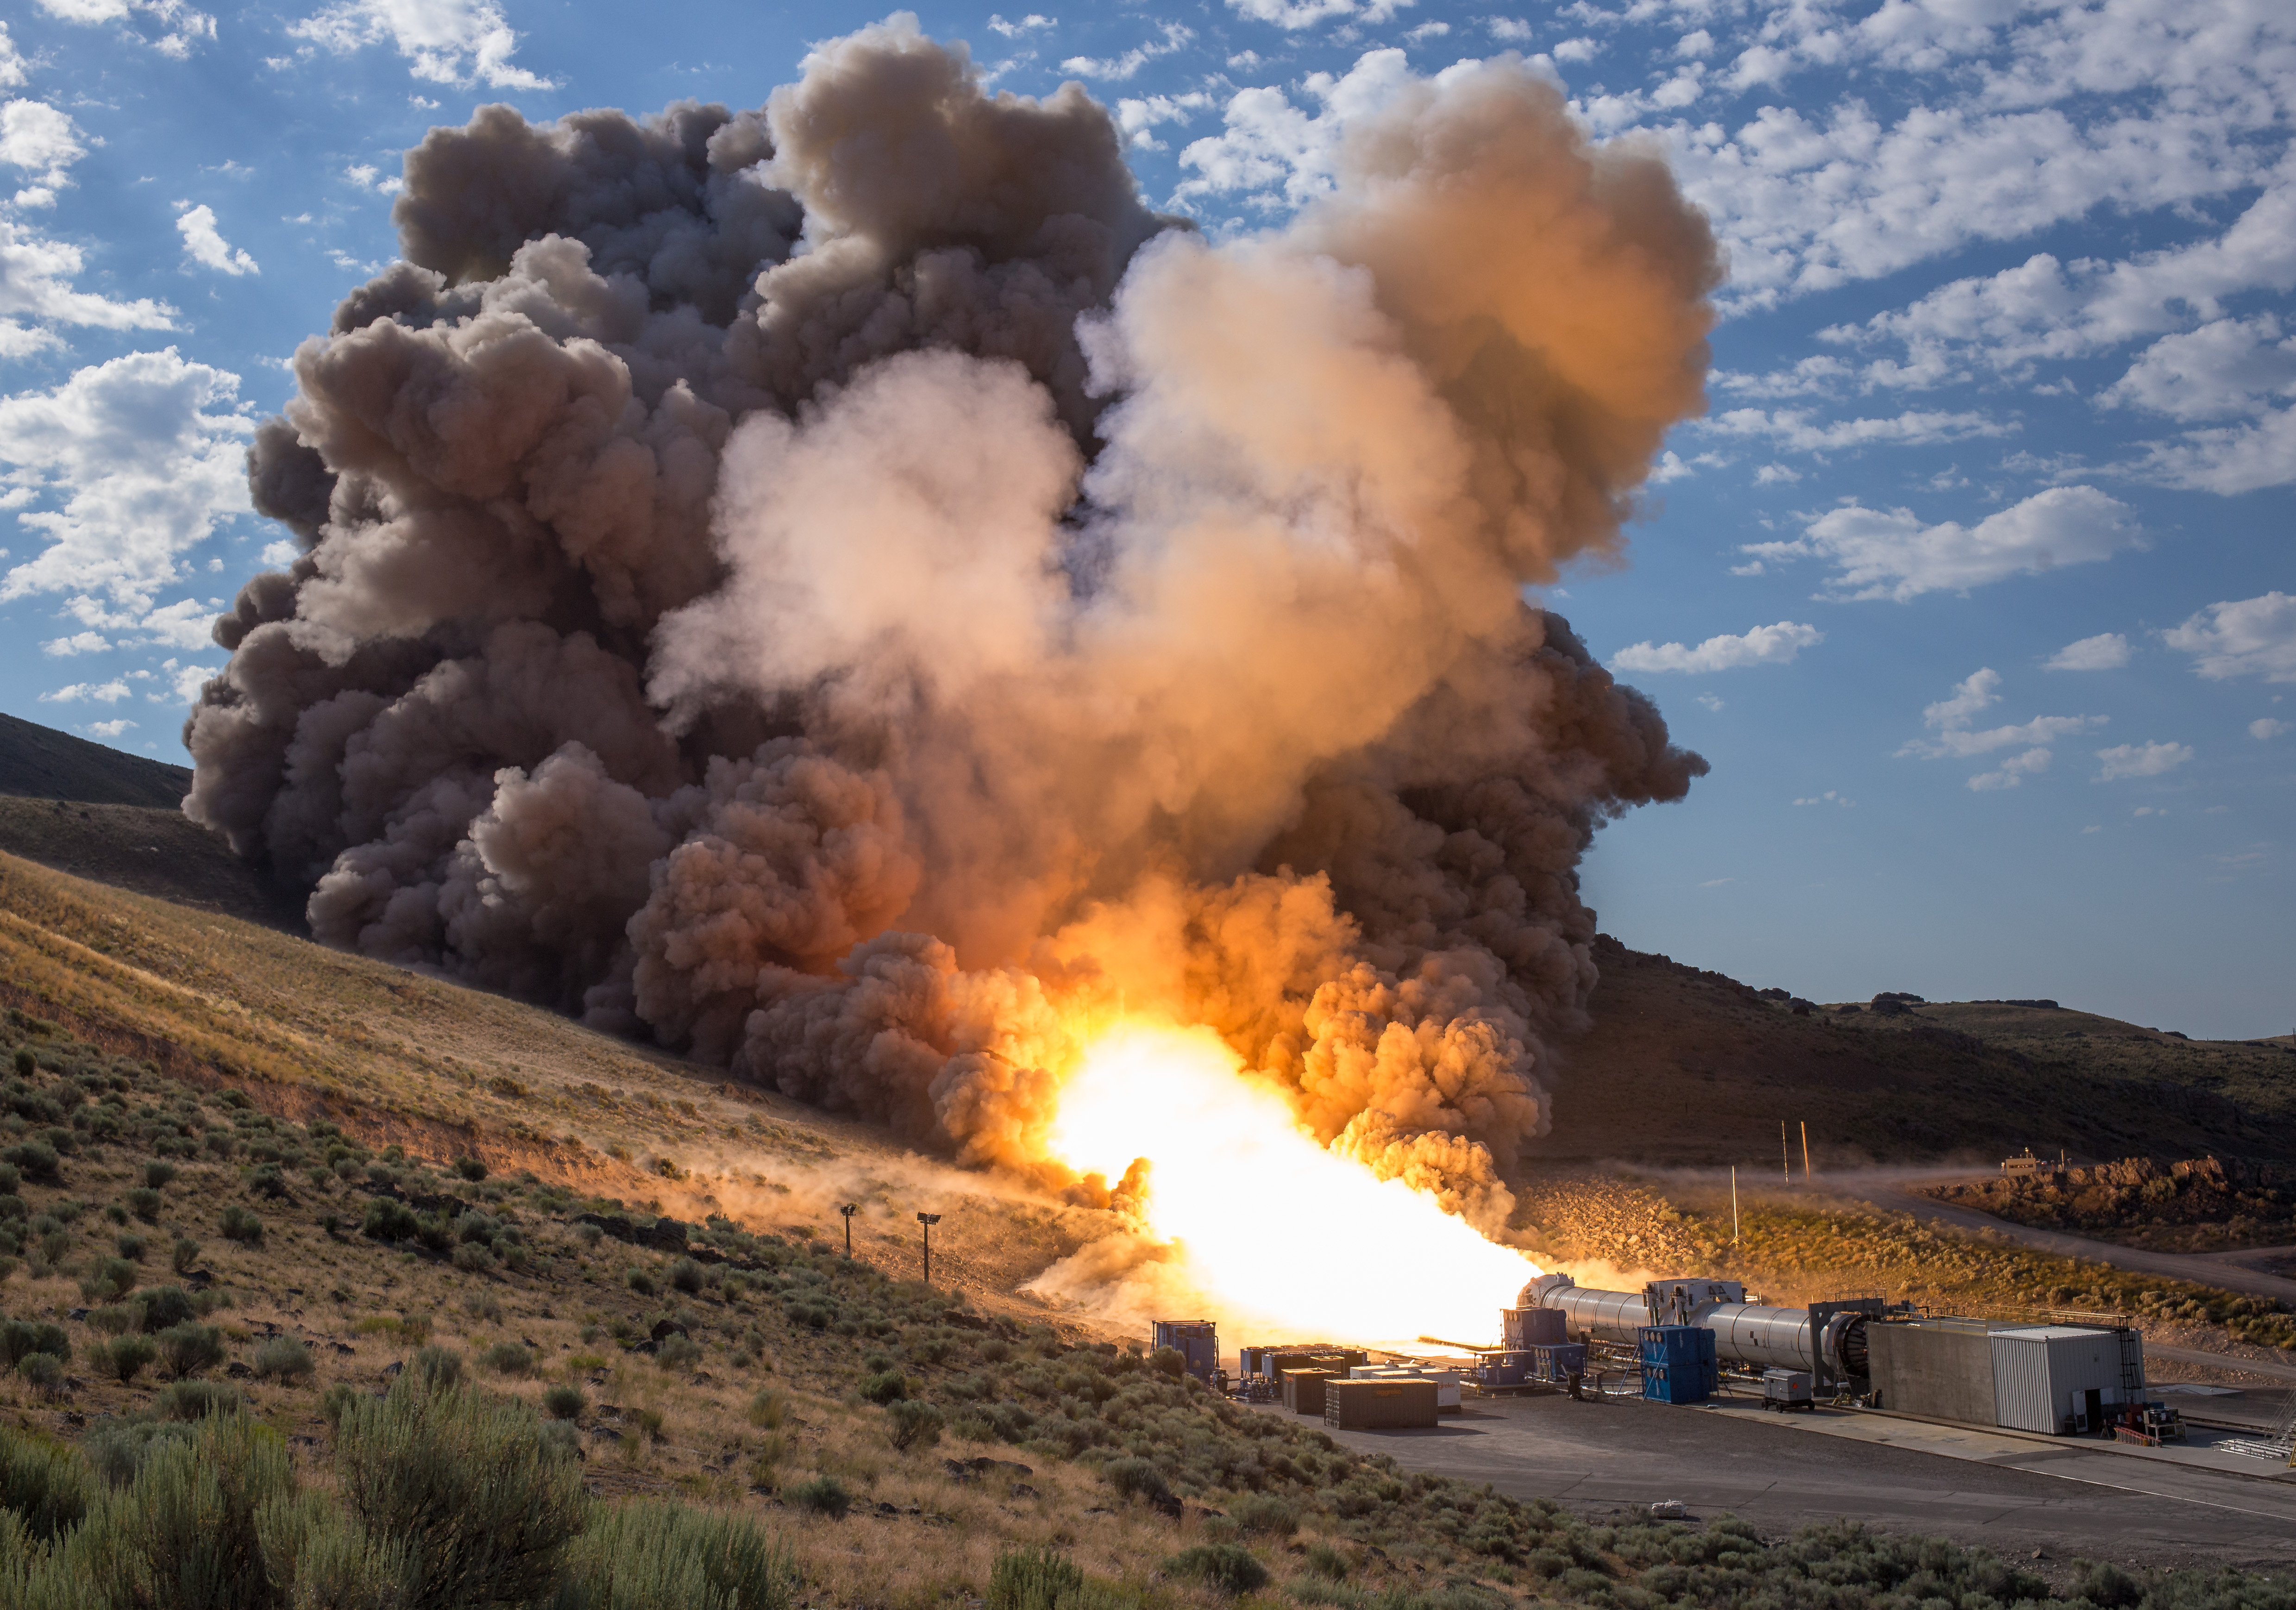 nasa sls booster test utah june 2016 for space launch system rocket